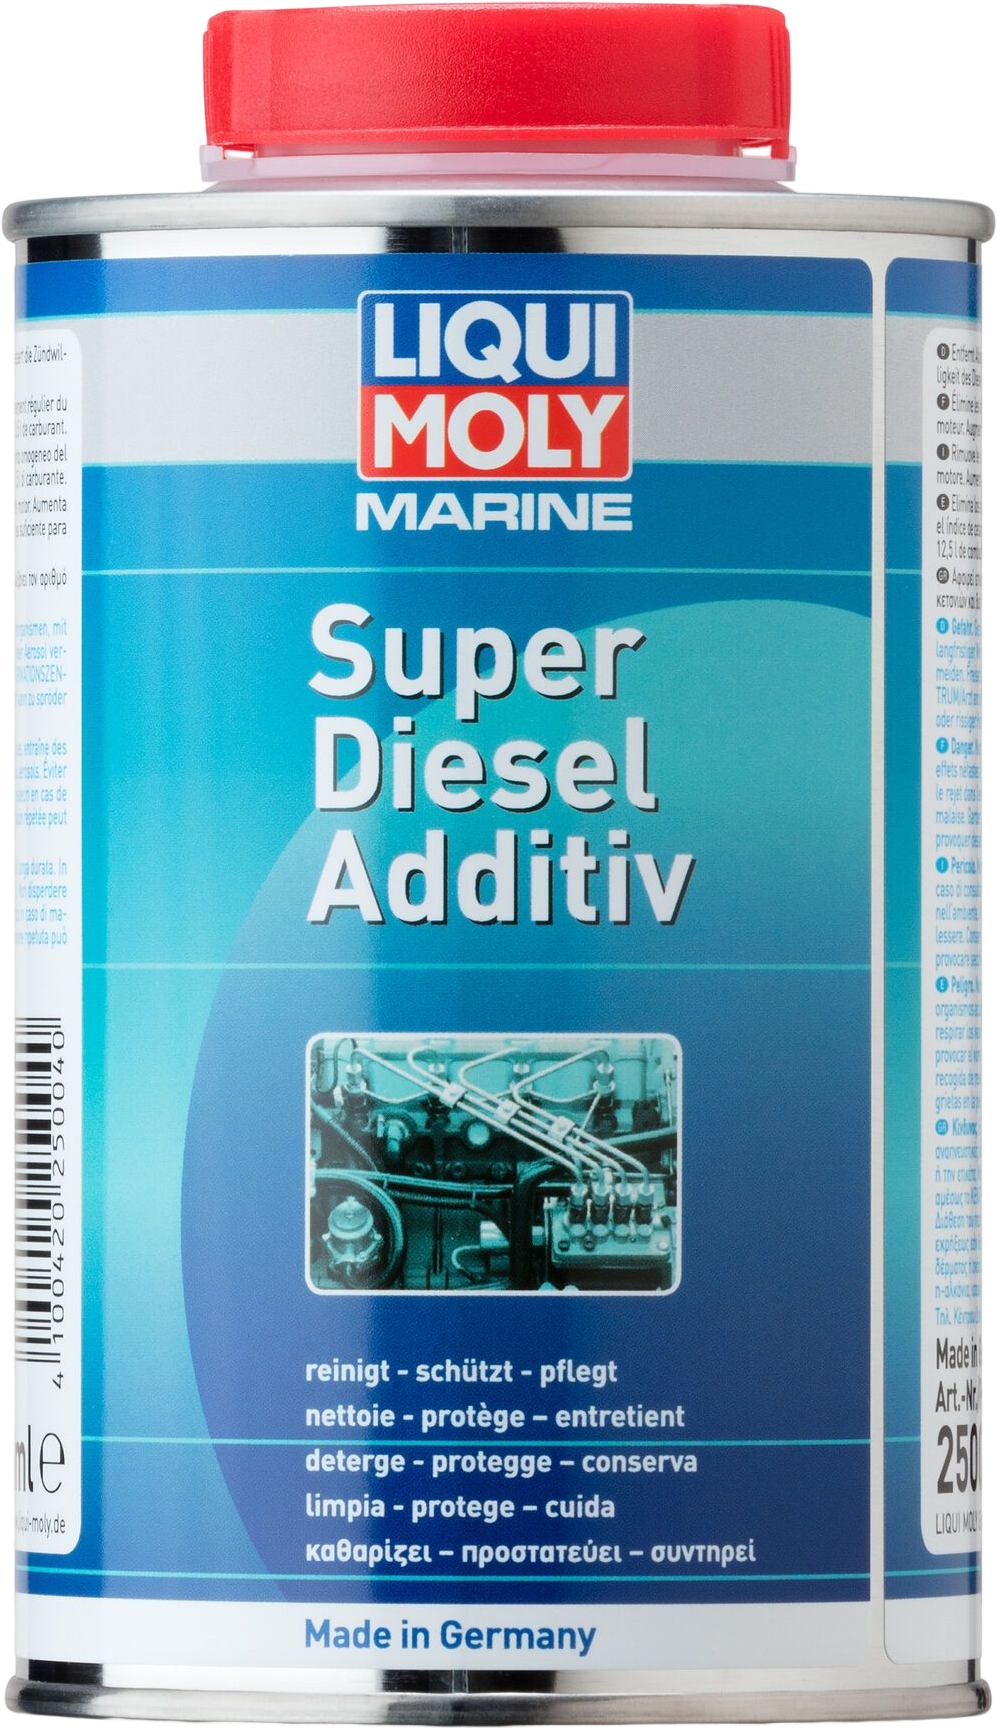 Liqui Moly Marine Super Diesel Additiv, 6 x 500 ml detail 2